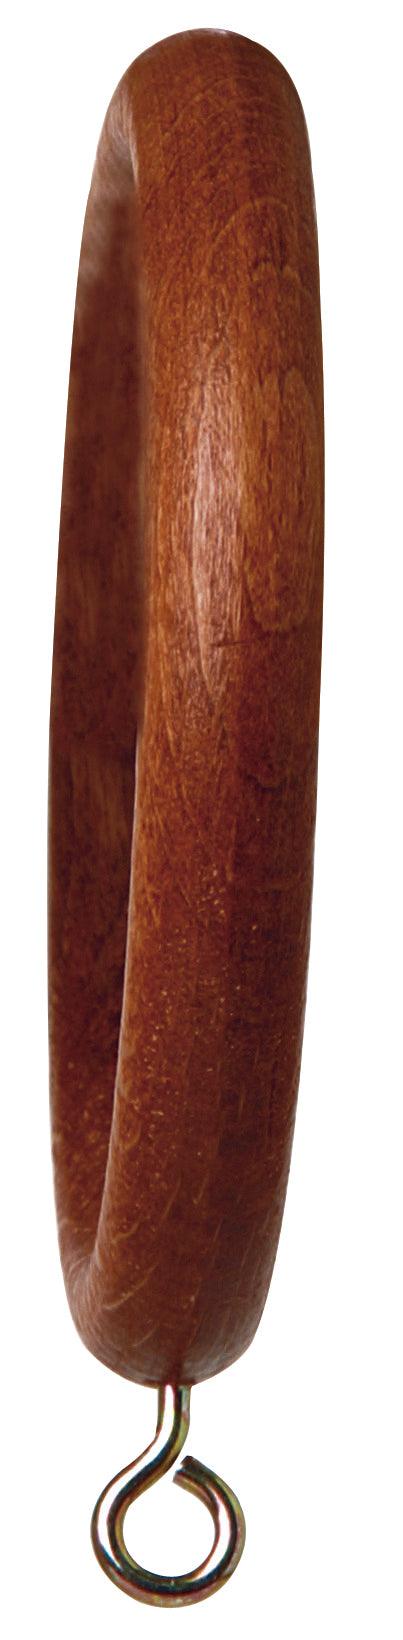 Ring Wood w/eye N 1-3/16" - Alan Richard Textiles, LTD Zabala 1-3/16" 2000 Wood & Maderas Wood